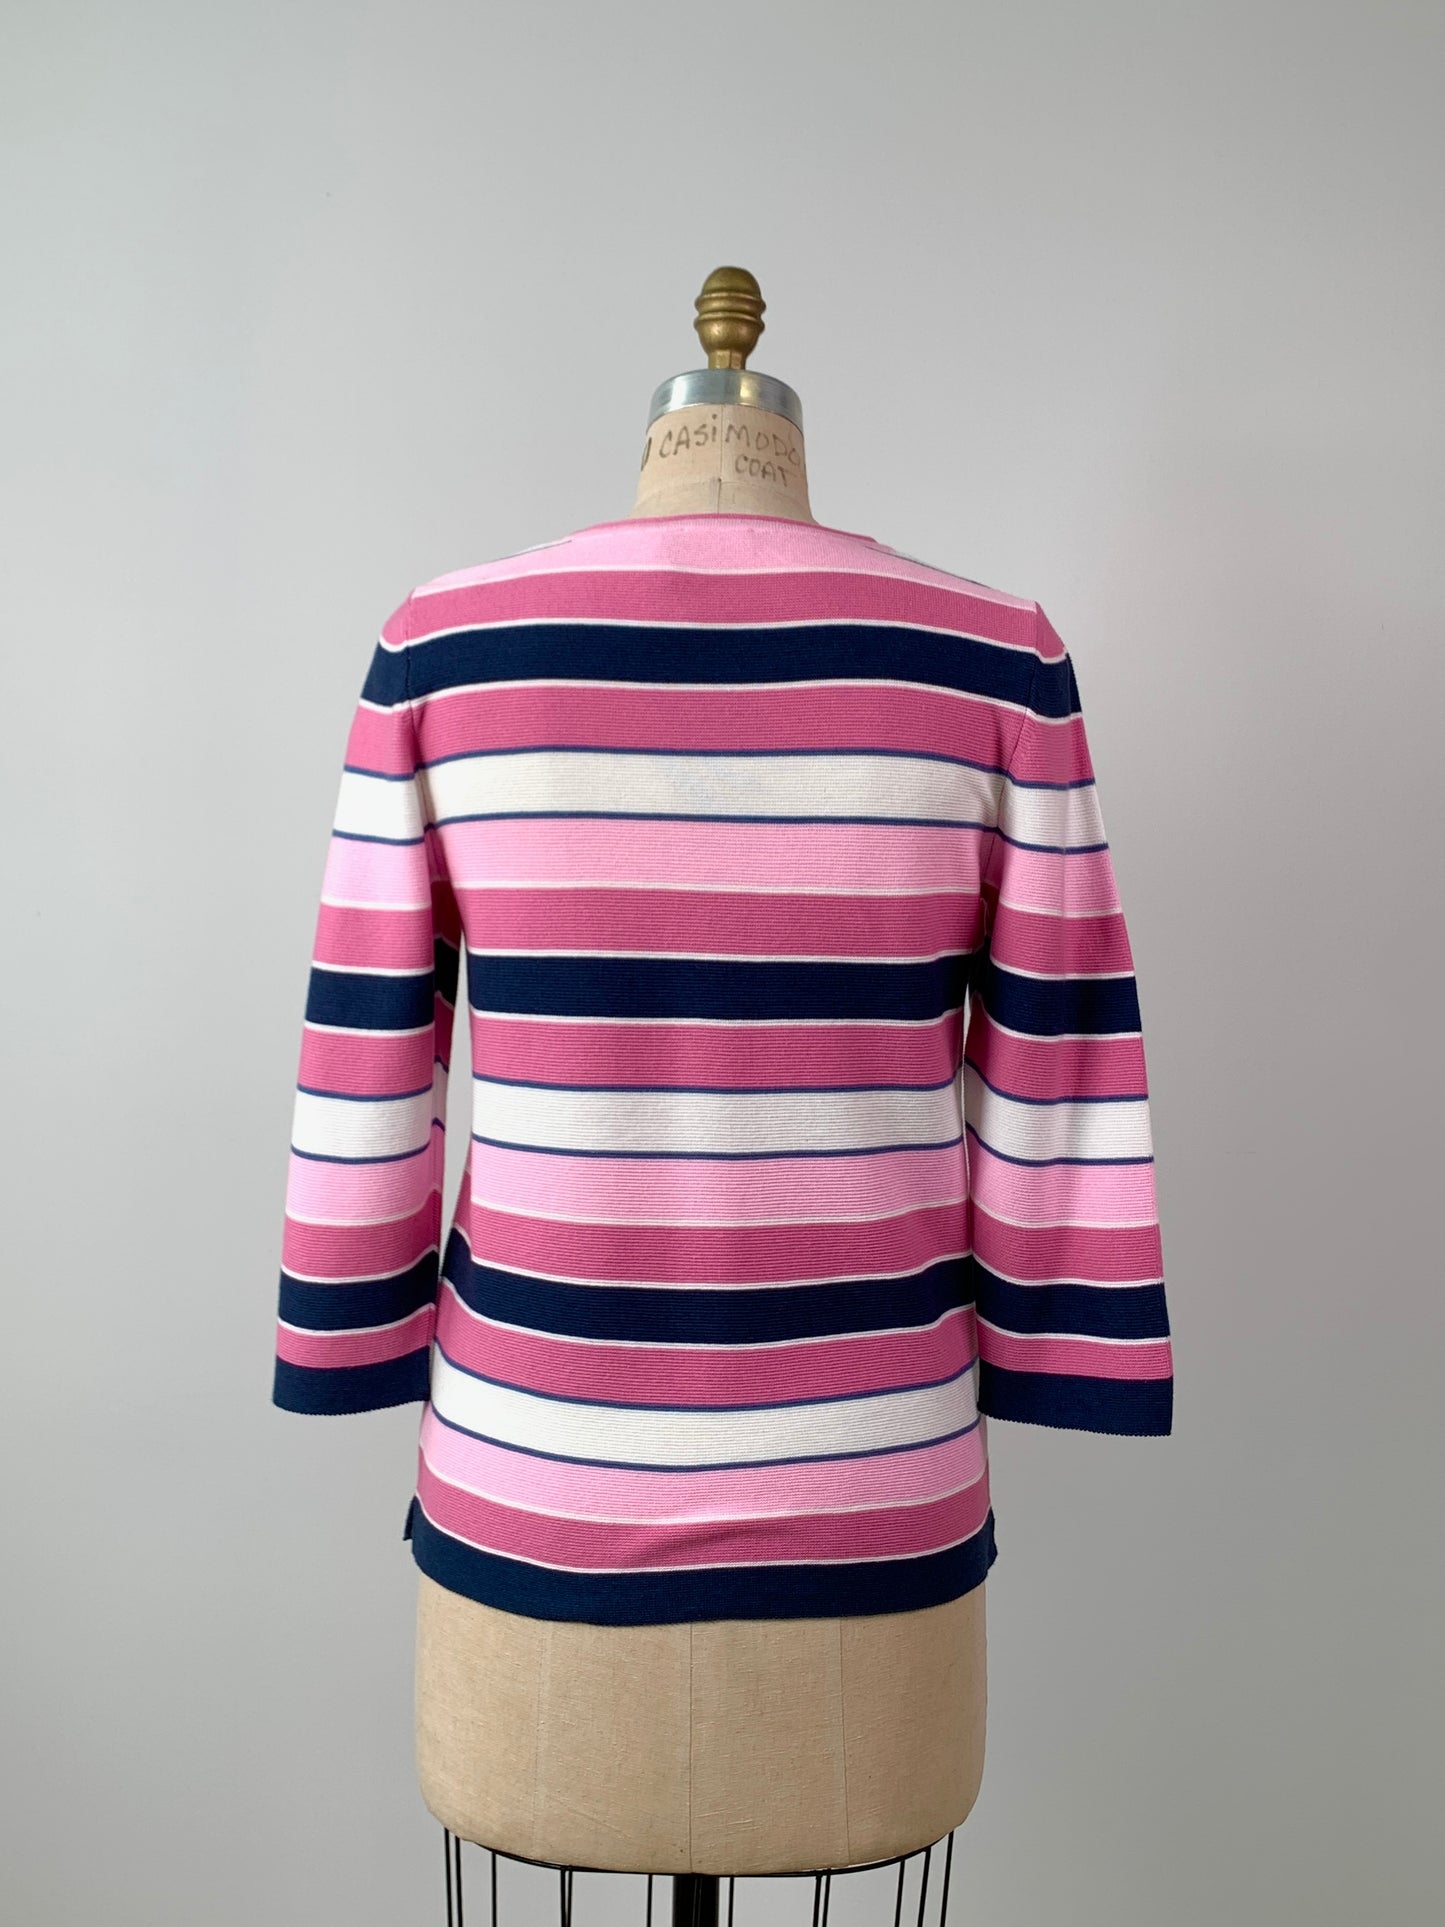 Chandail en tricot à rayures rose blanc et marine (M)